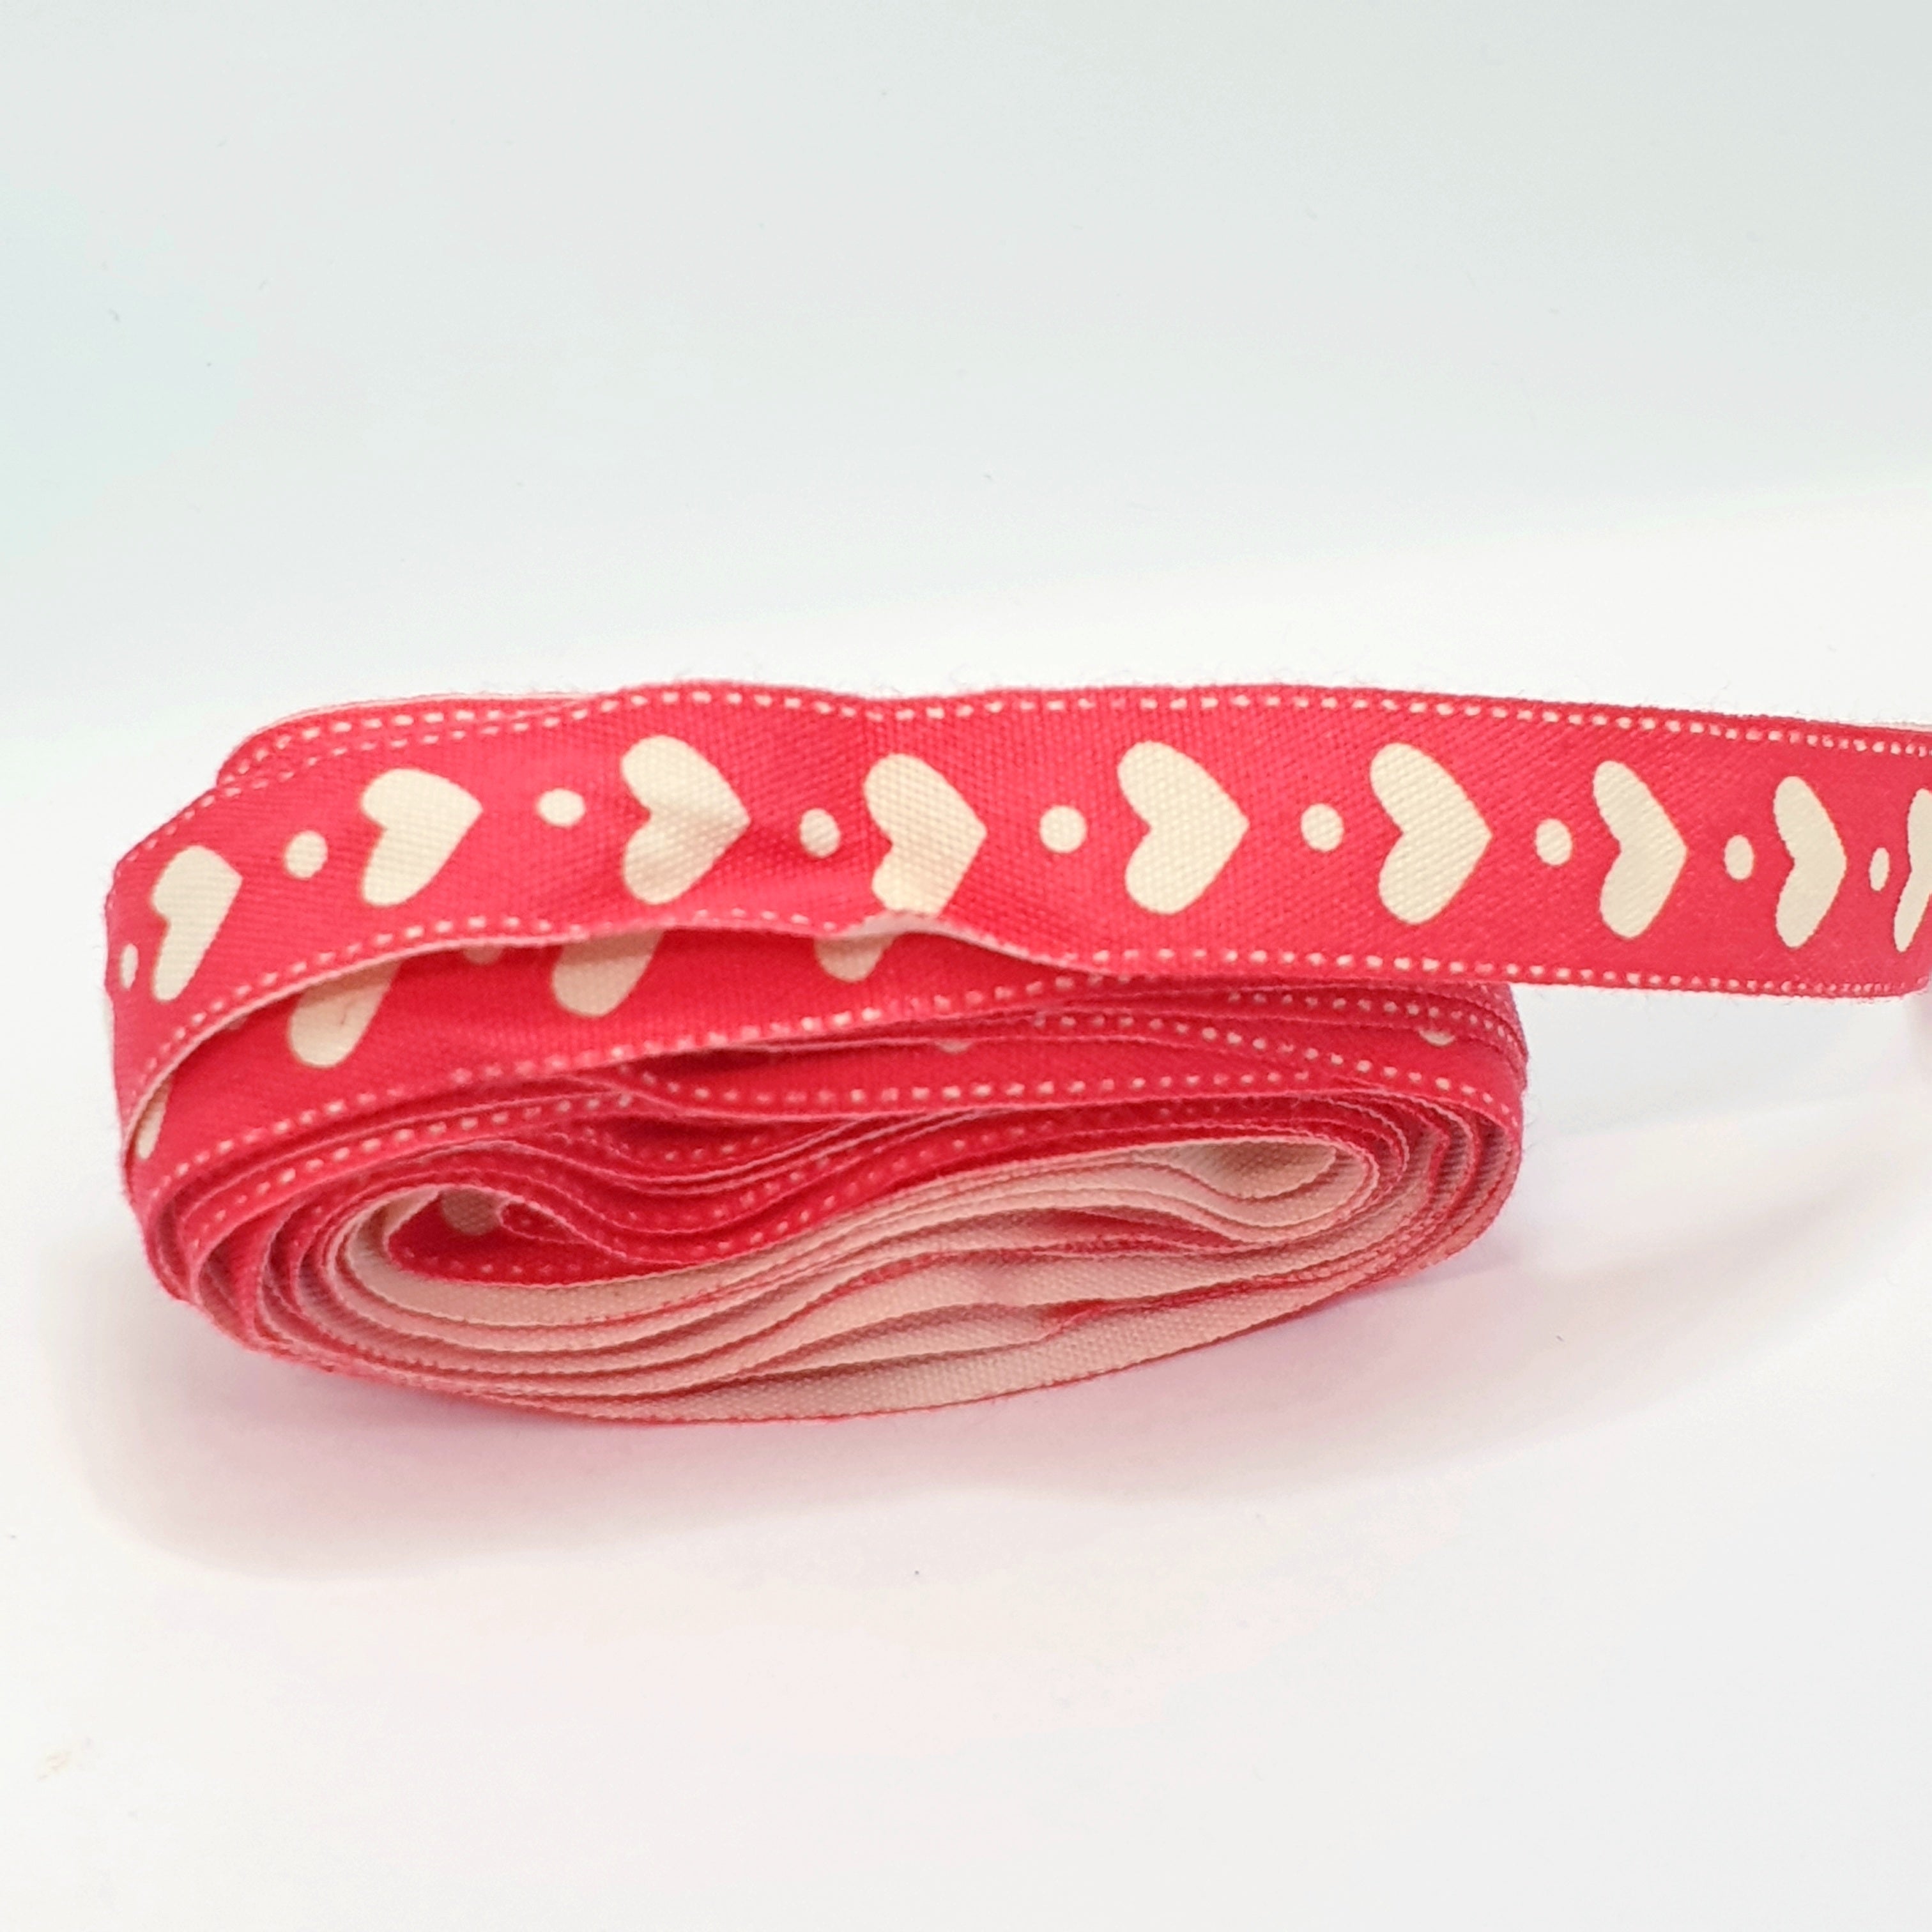 MajorCrafts 4.5m 5yds - 15mm wide Heart Pttern Cotton Fabric Ribbon